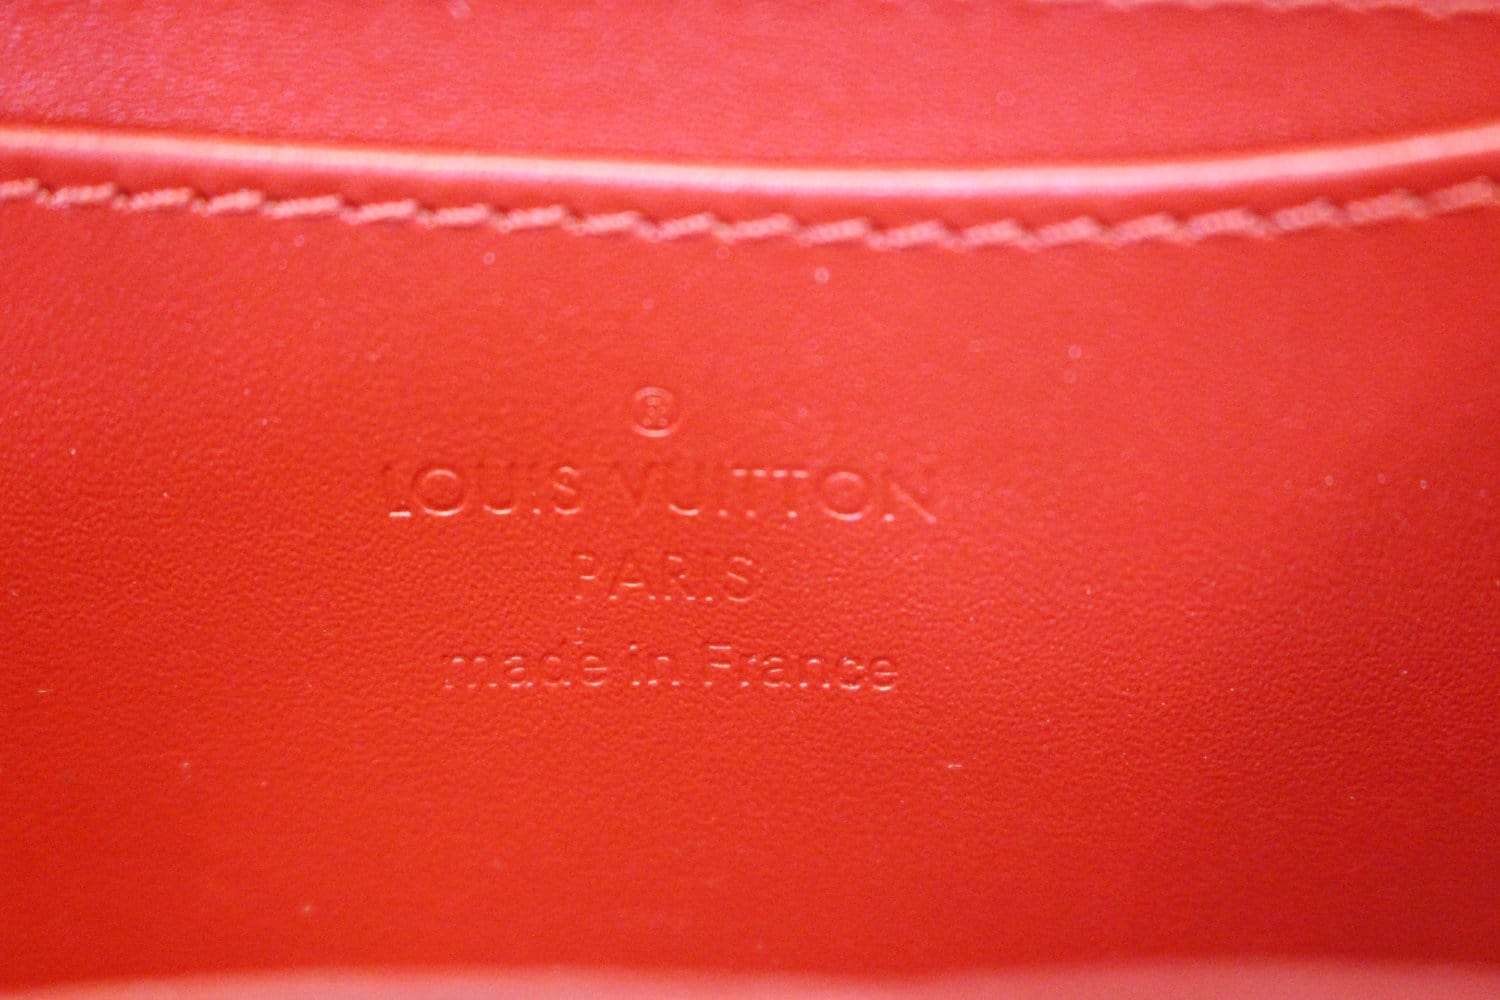 Louis Vuitton Vernis Zippy Coin Purse Red at Jill's Consignment